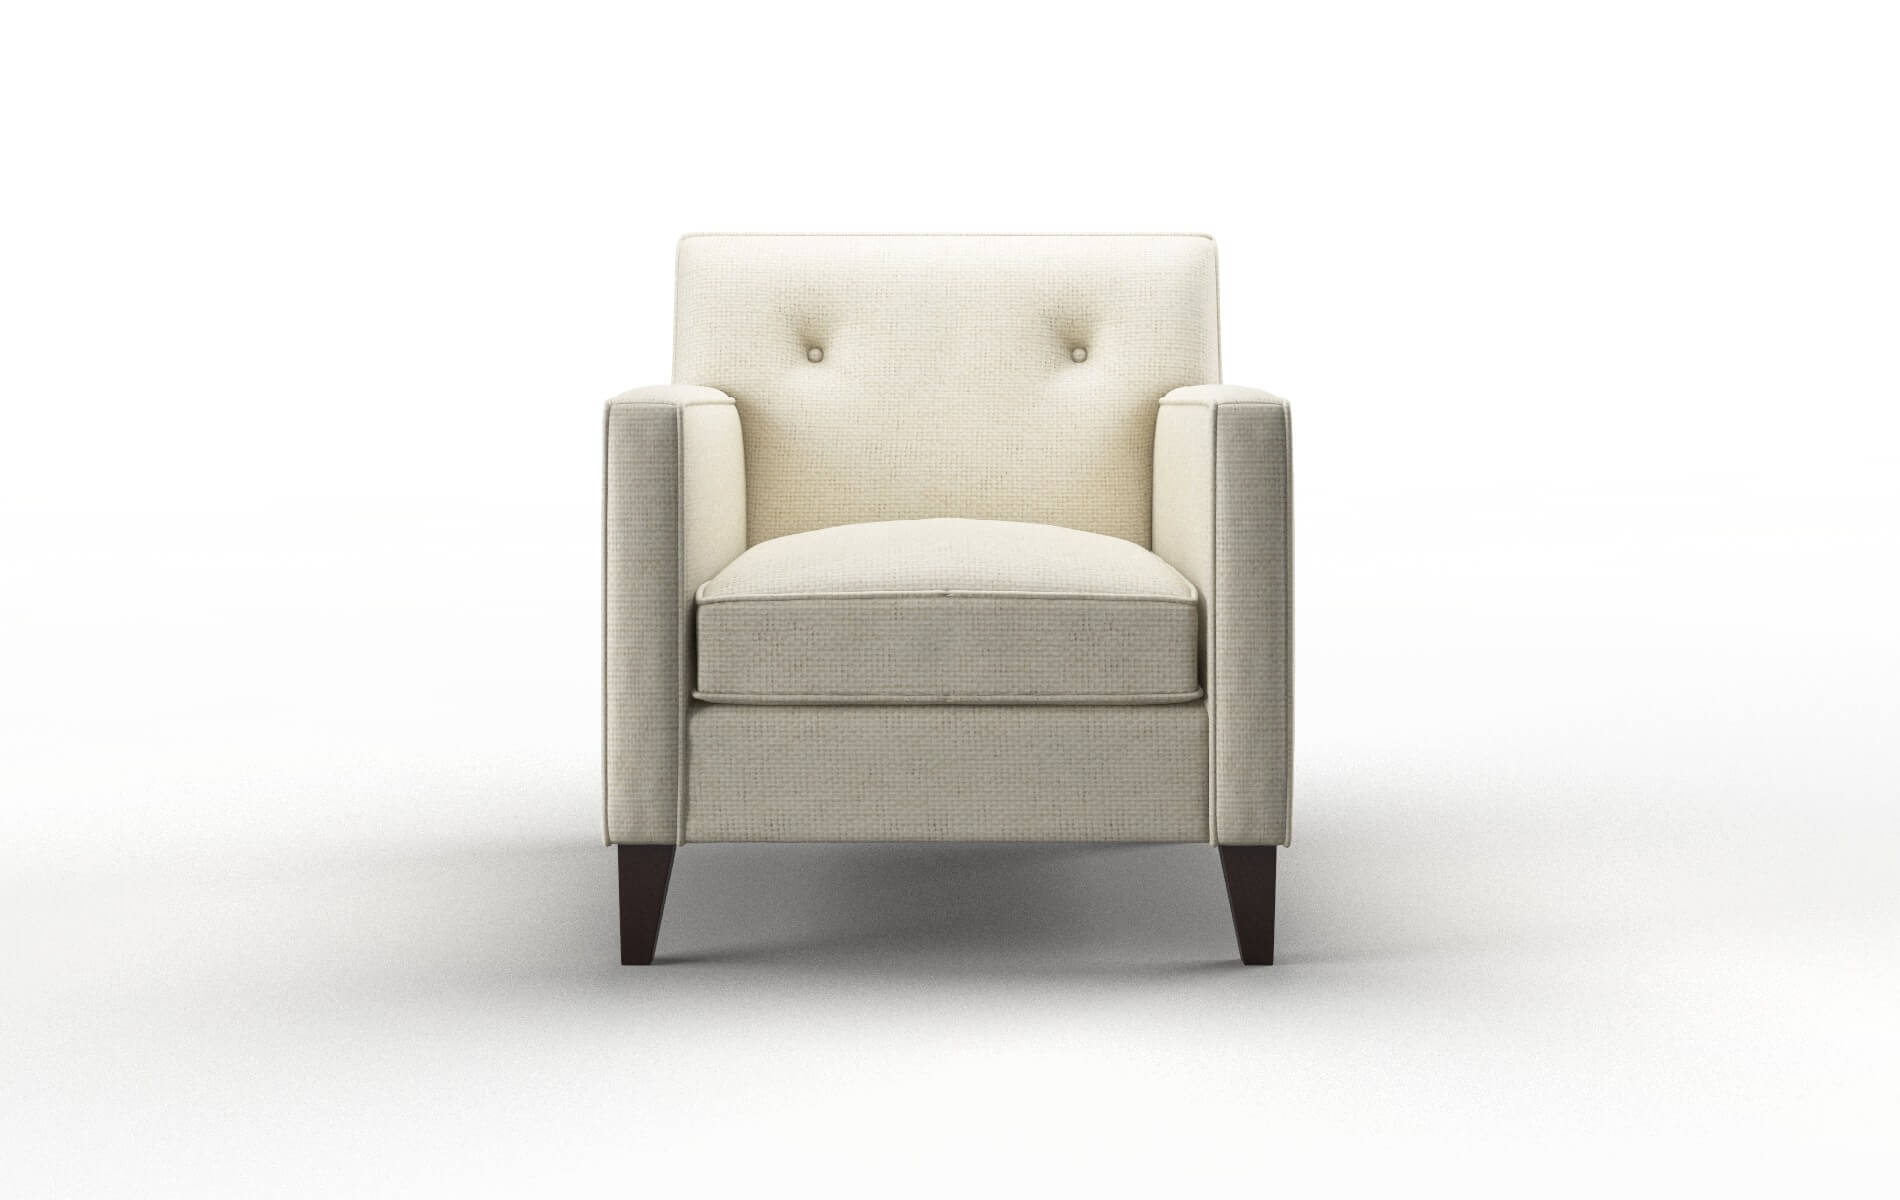 Harper Lana Sand Chair espresso legs 1